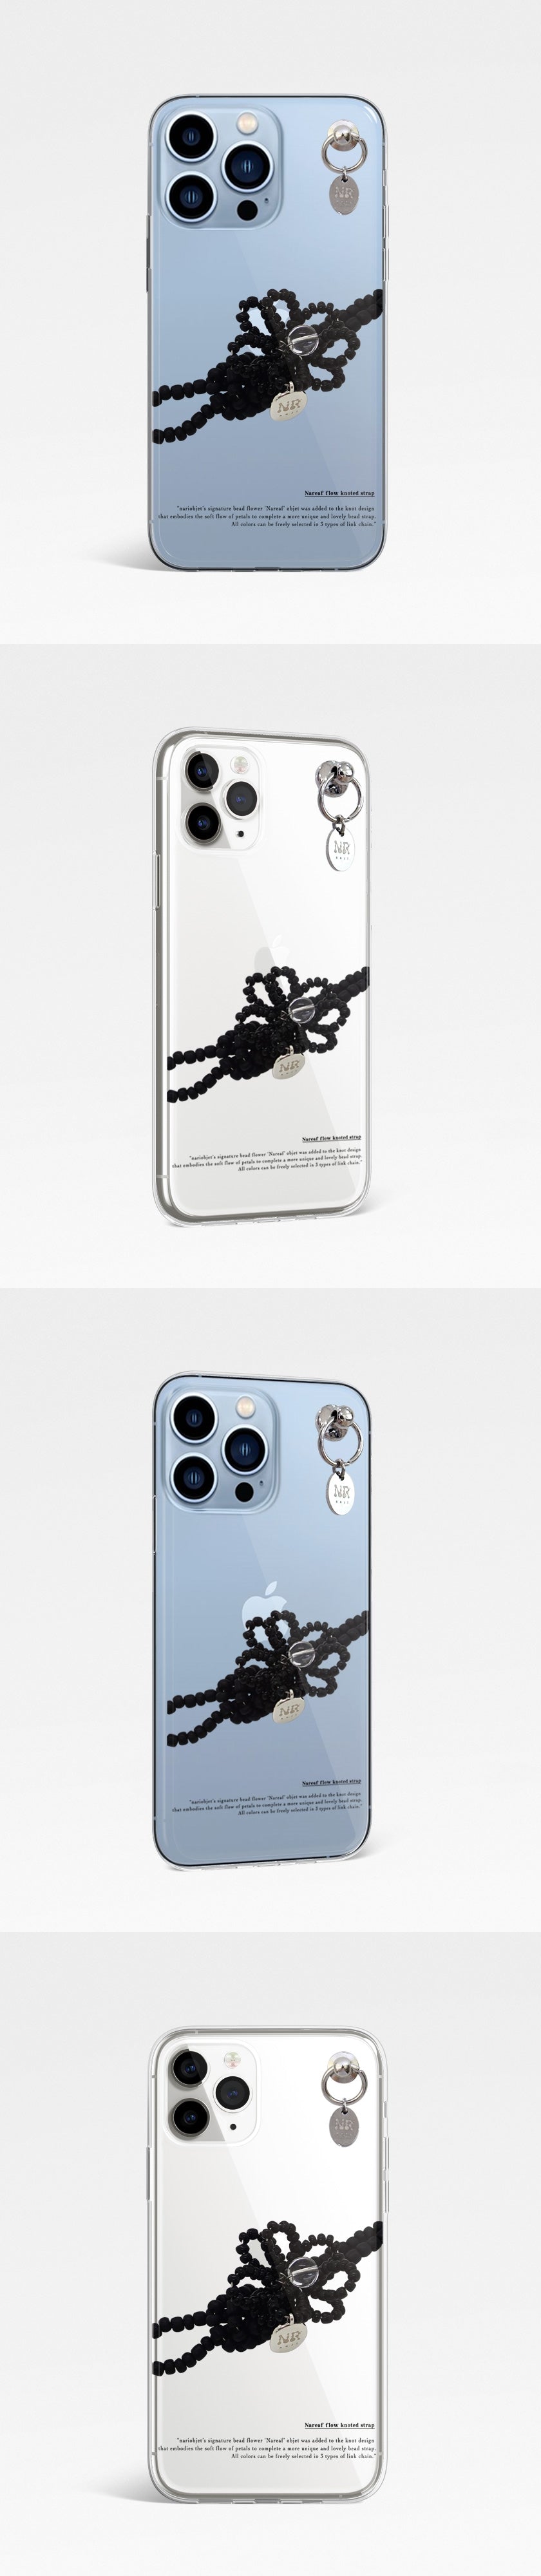 Nareaf knoted jelly phone case (black)